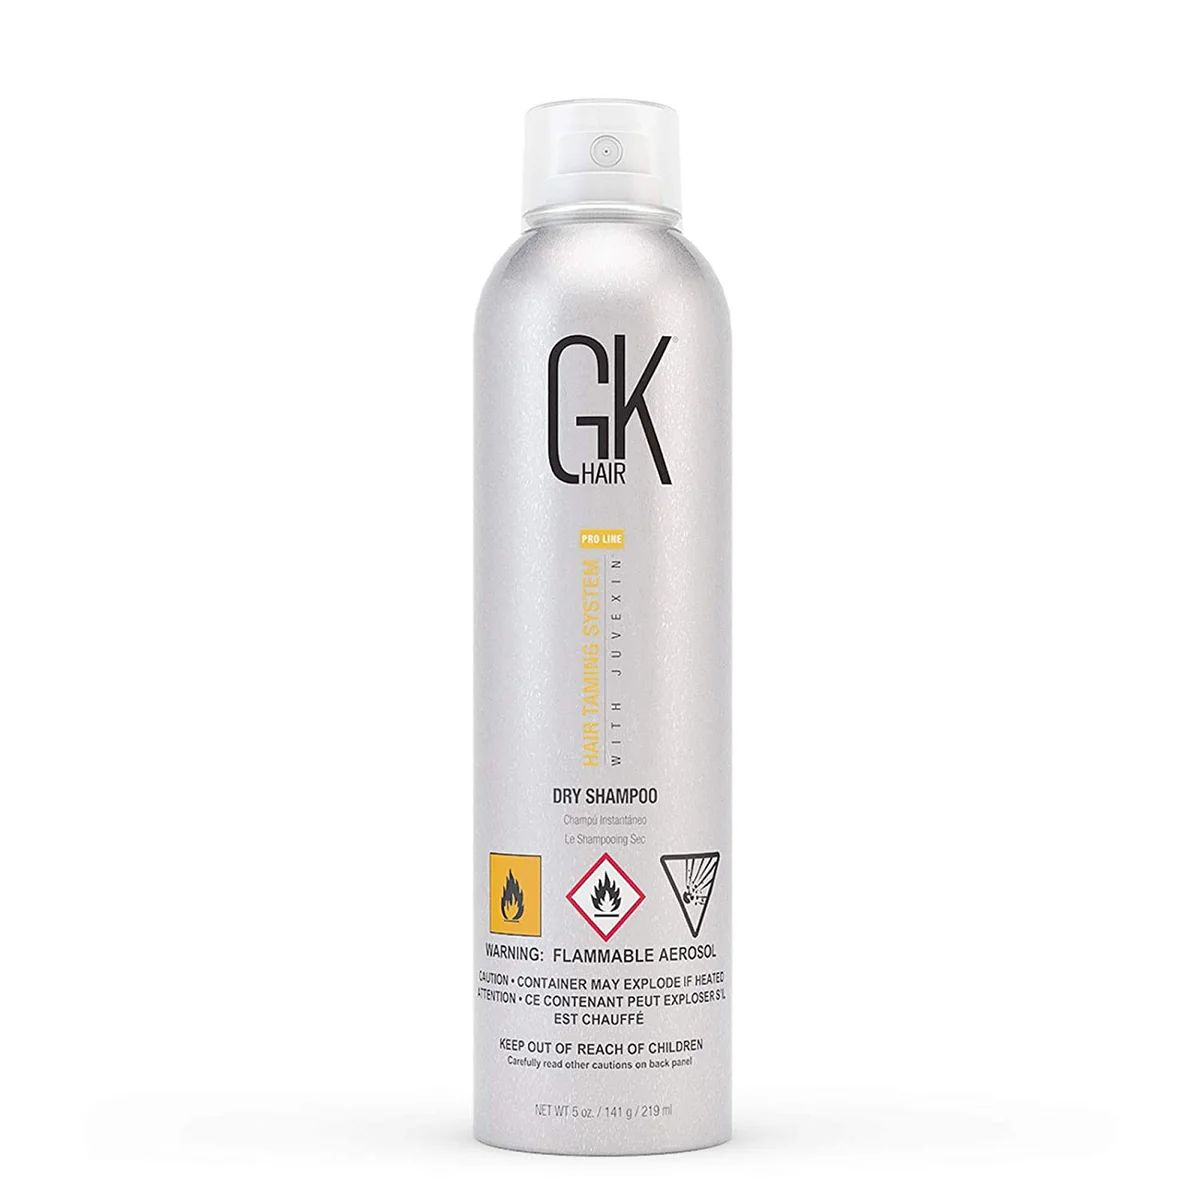 GKhair - Dry Shampoo | NewCo Beauty